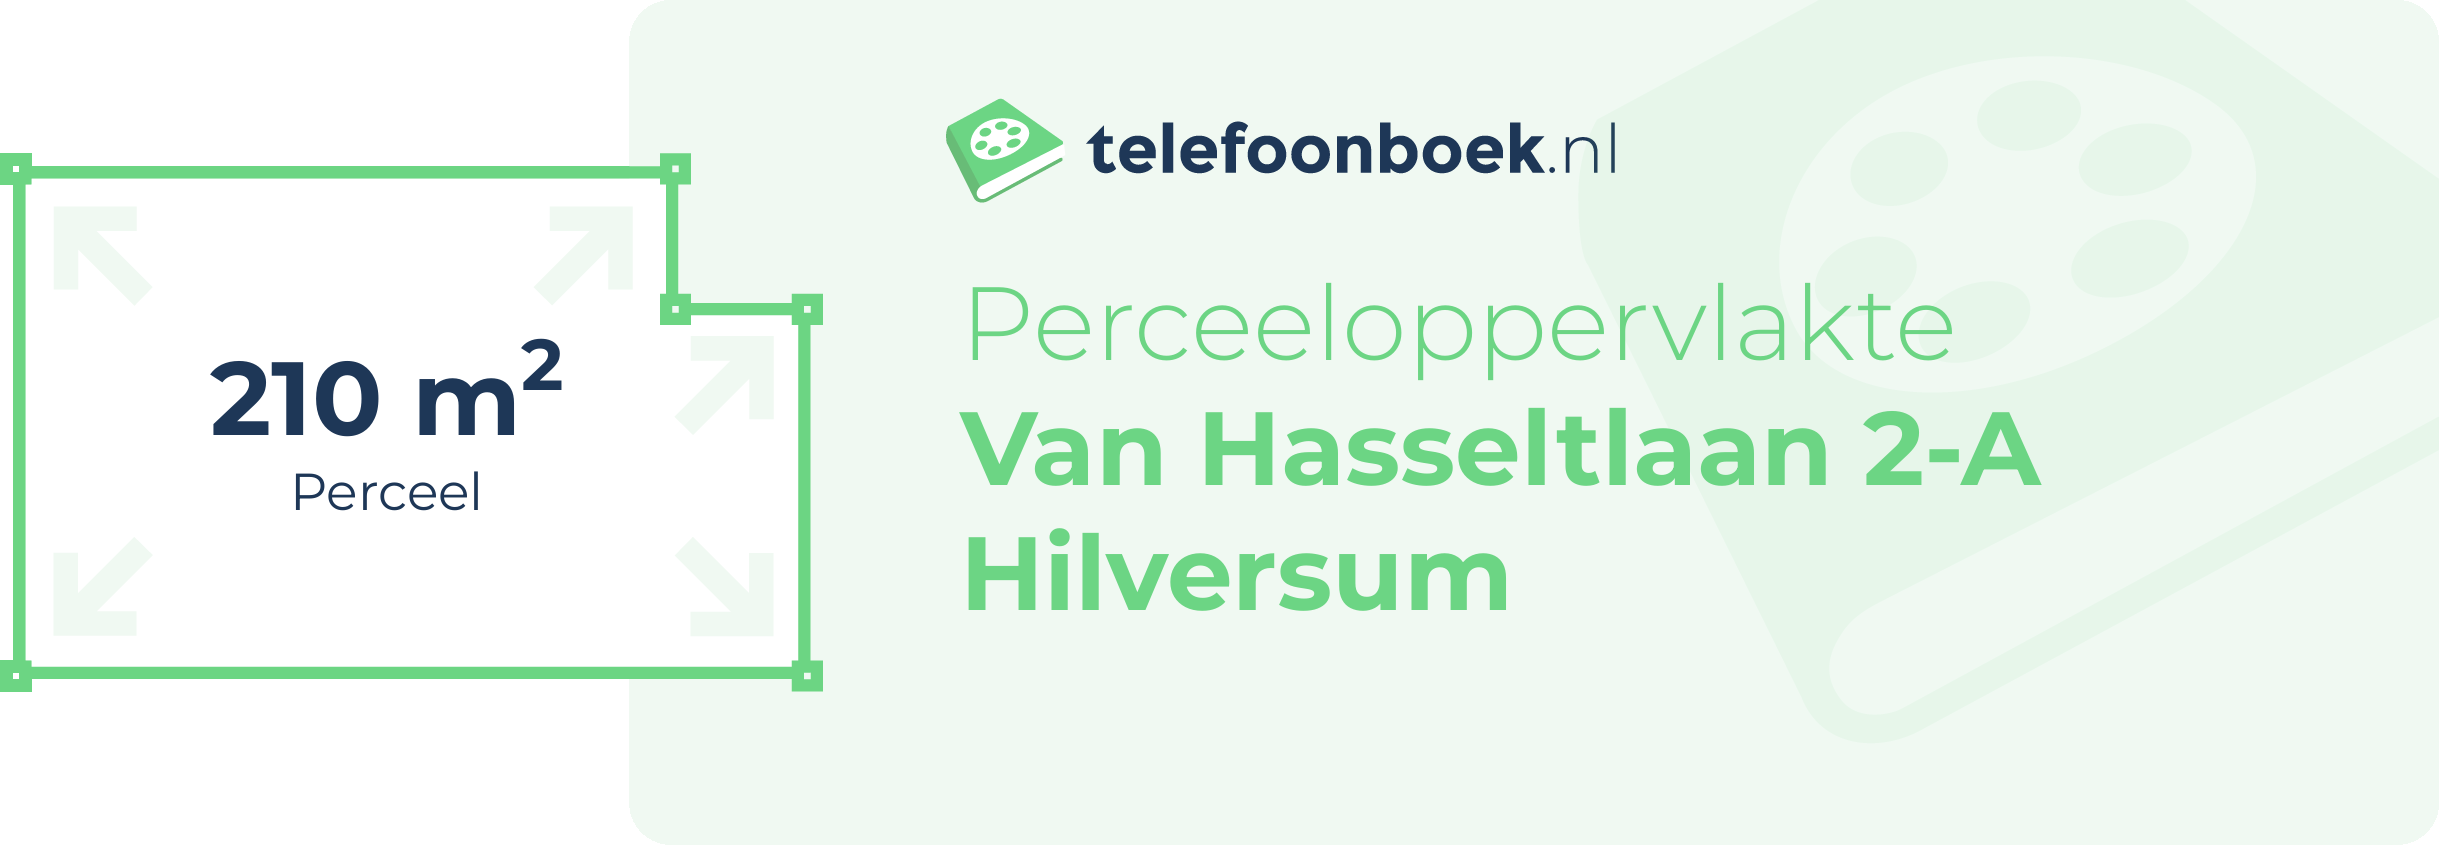 Perceeloppervlakte Van Hasseltlaan 2-A Hilversum